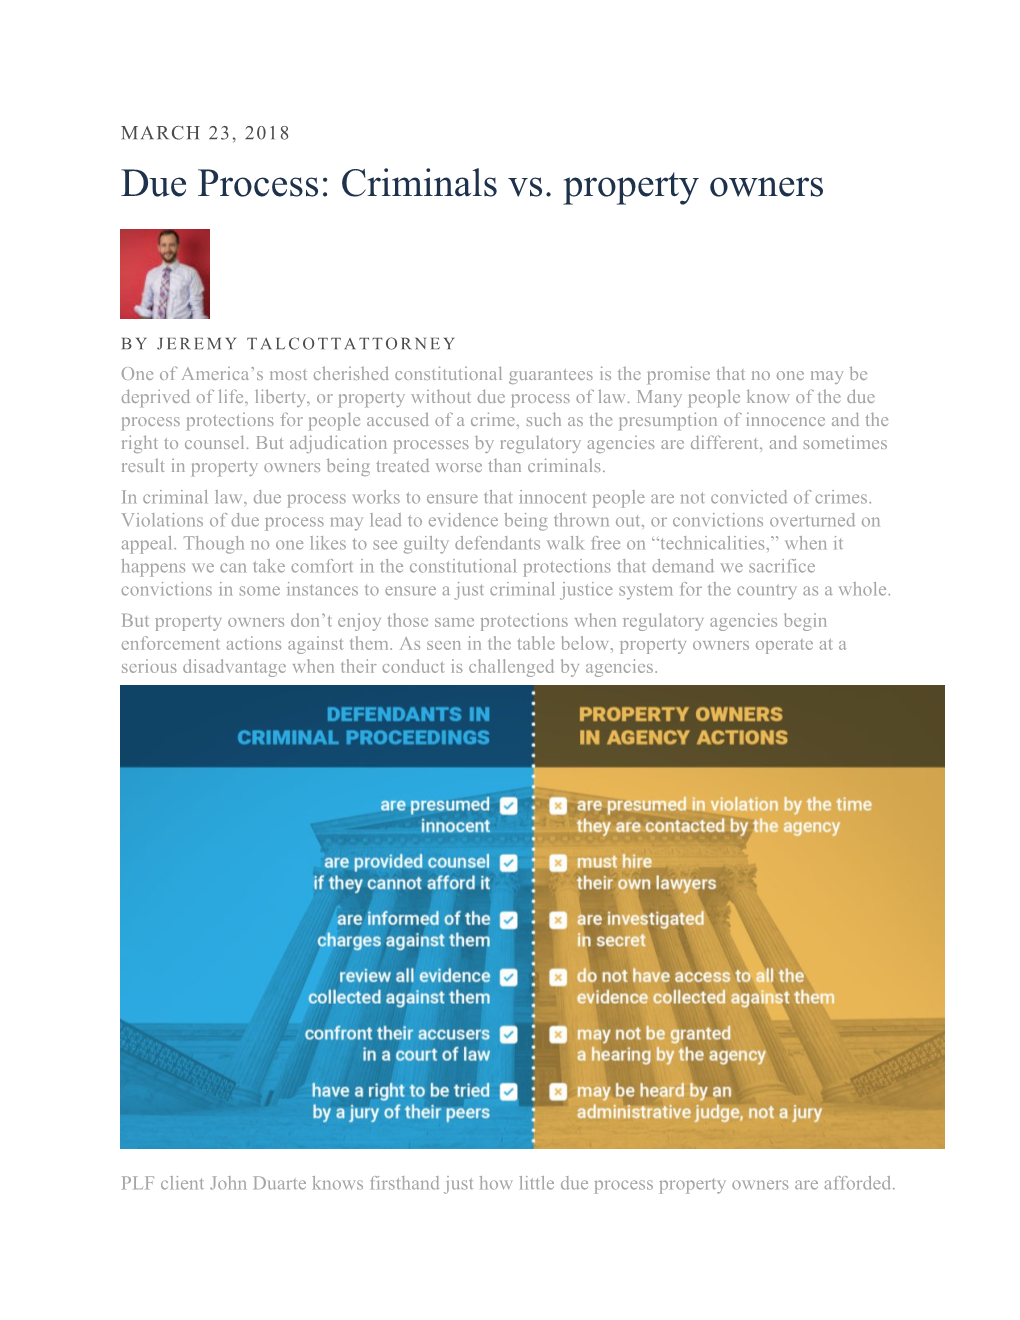 Due Process: Criminals Vs. Property Owners